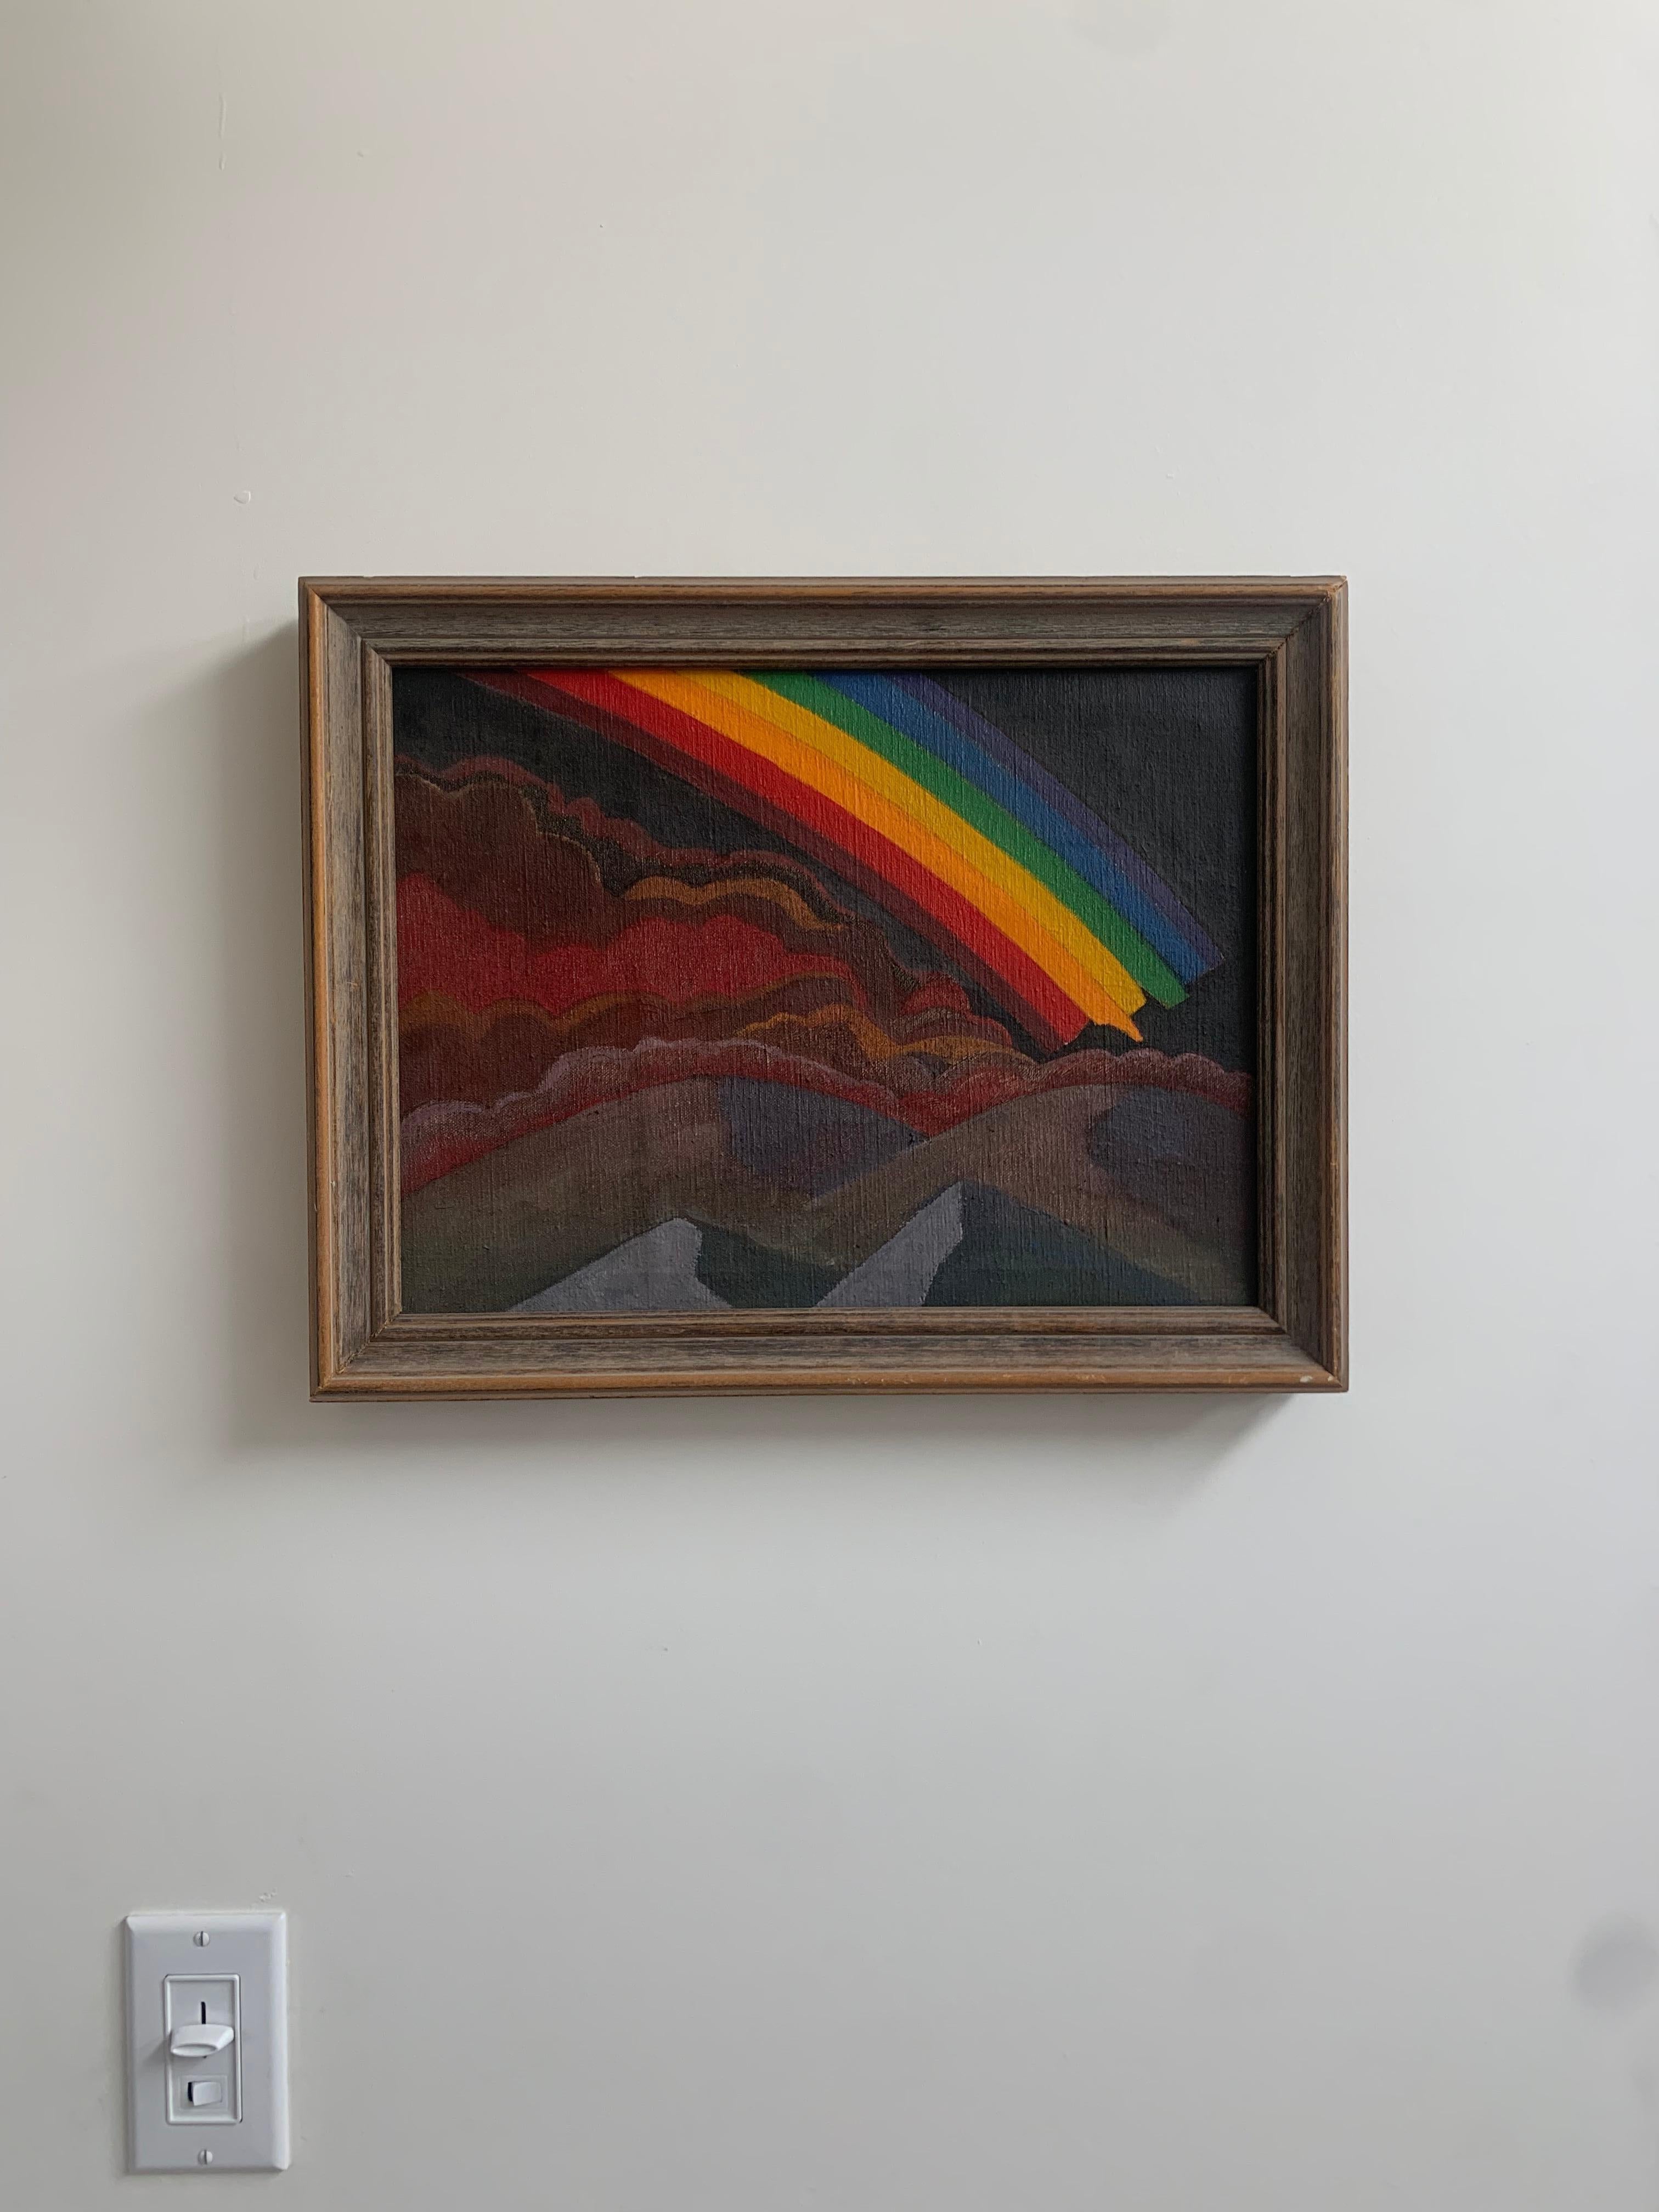 Ed Beardsley Painting “Midnight Rainbow”, 1980, Signed and Framed 3